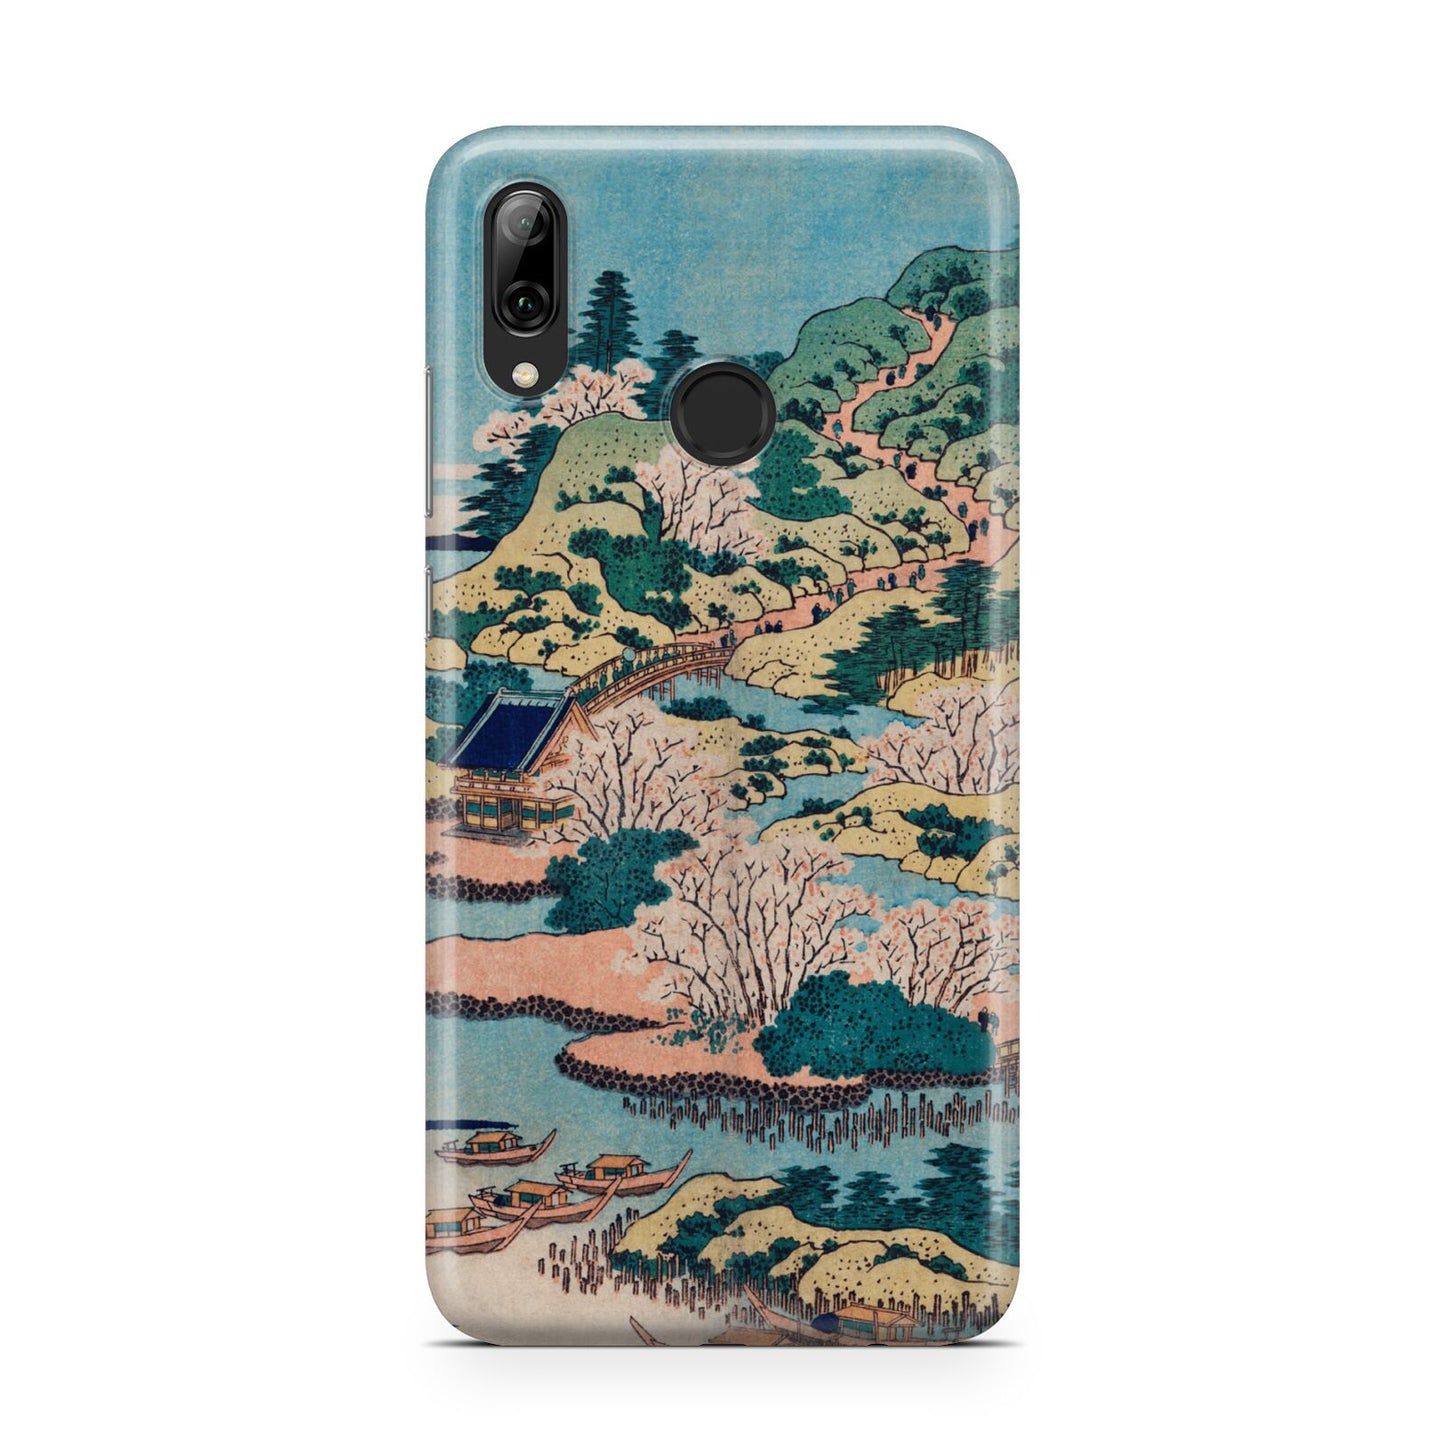 Coastal Community By Katsushika Hokusai Huawei Y7 2019